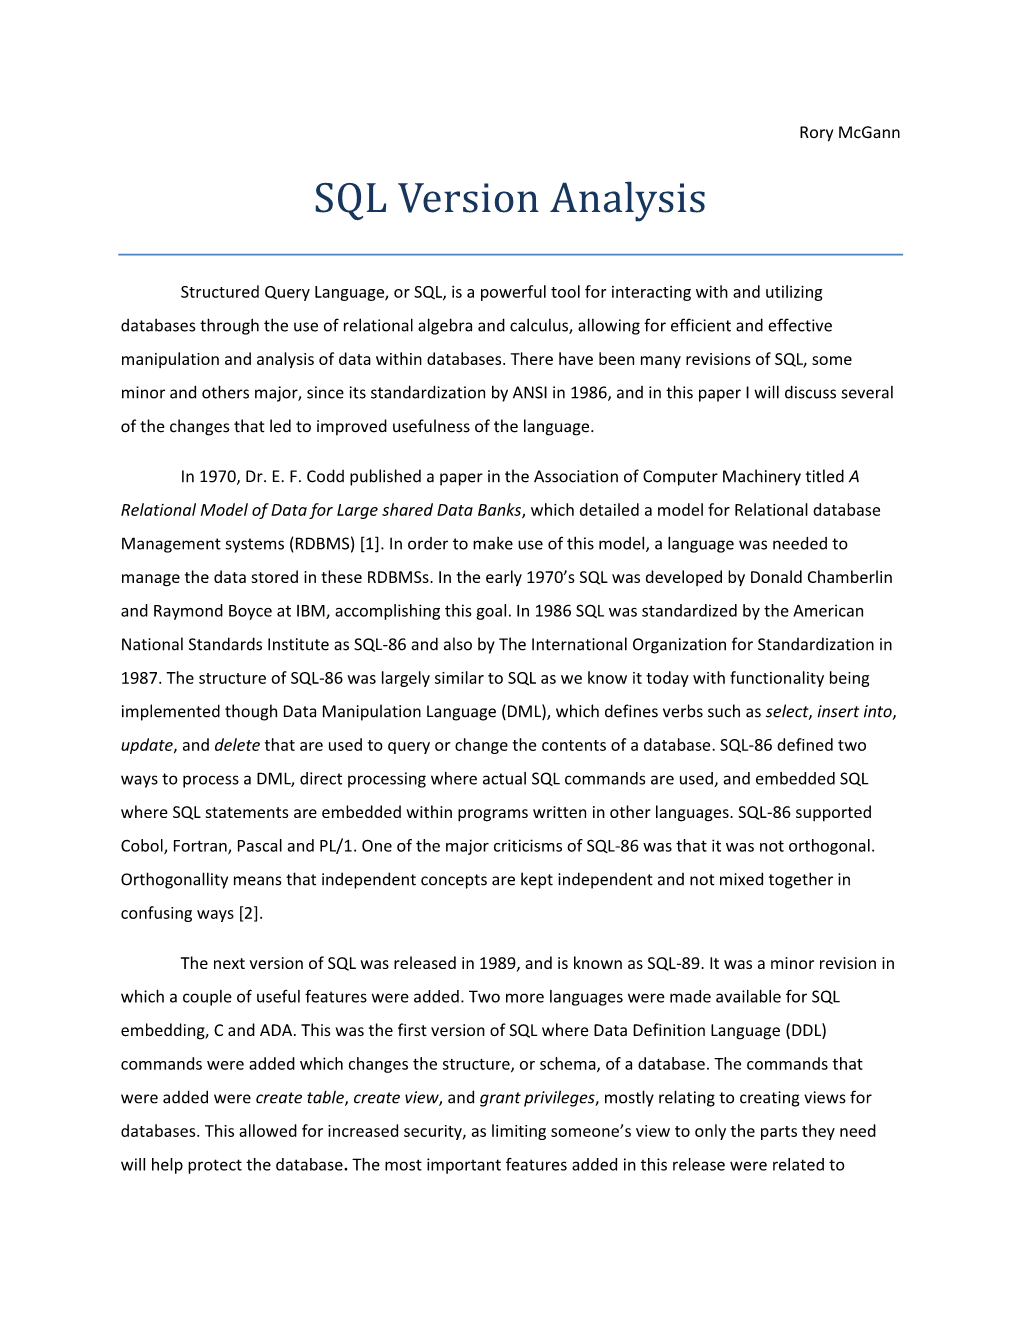 SQL Version Analysis